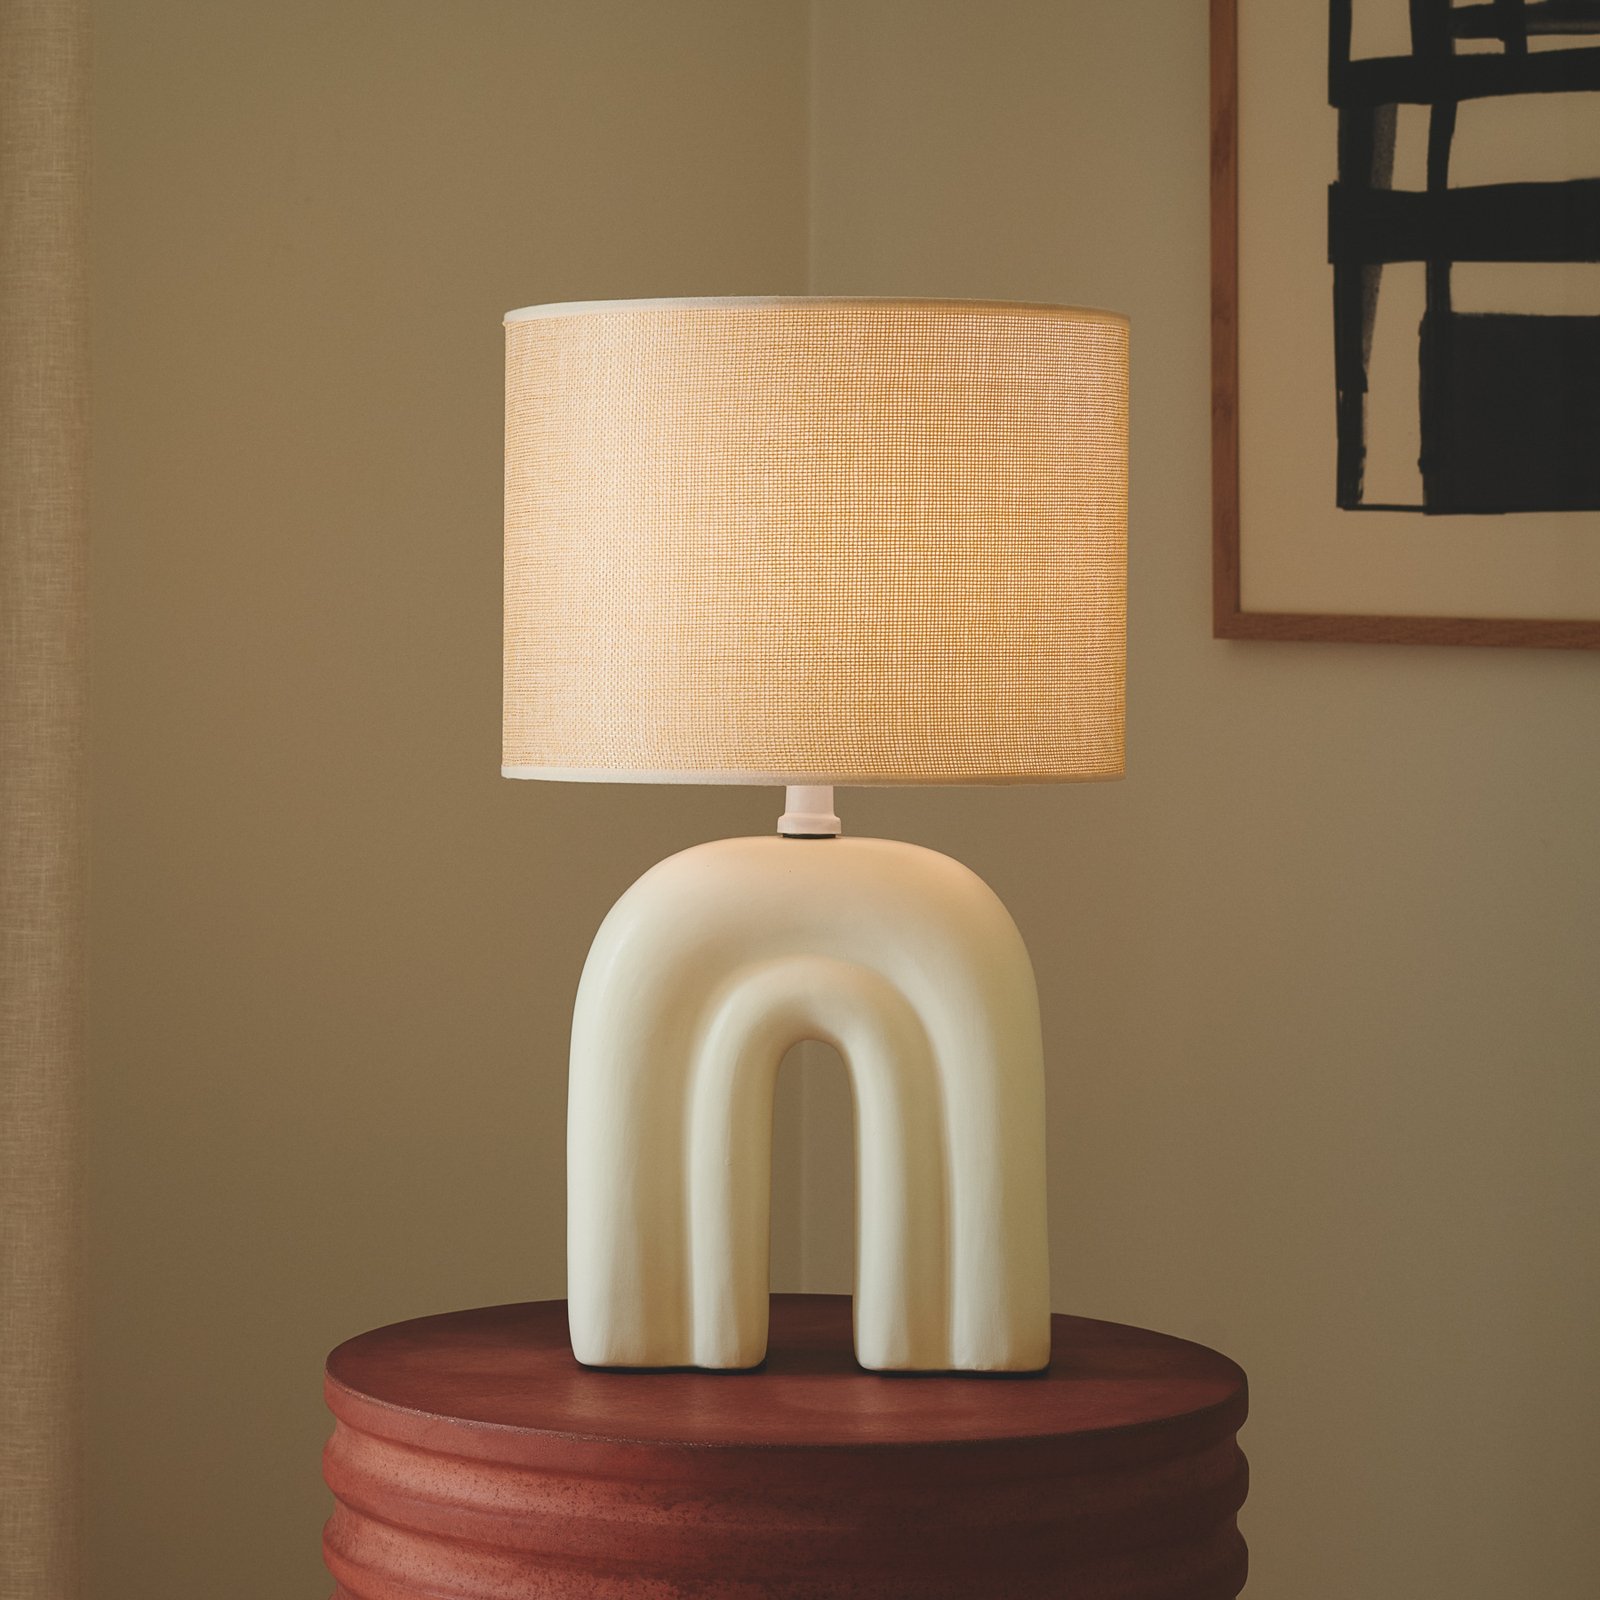 Haze bordslampa, keramik, lampskärm i textil, beige